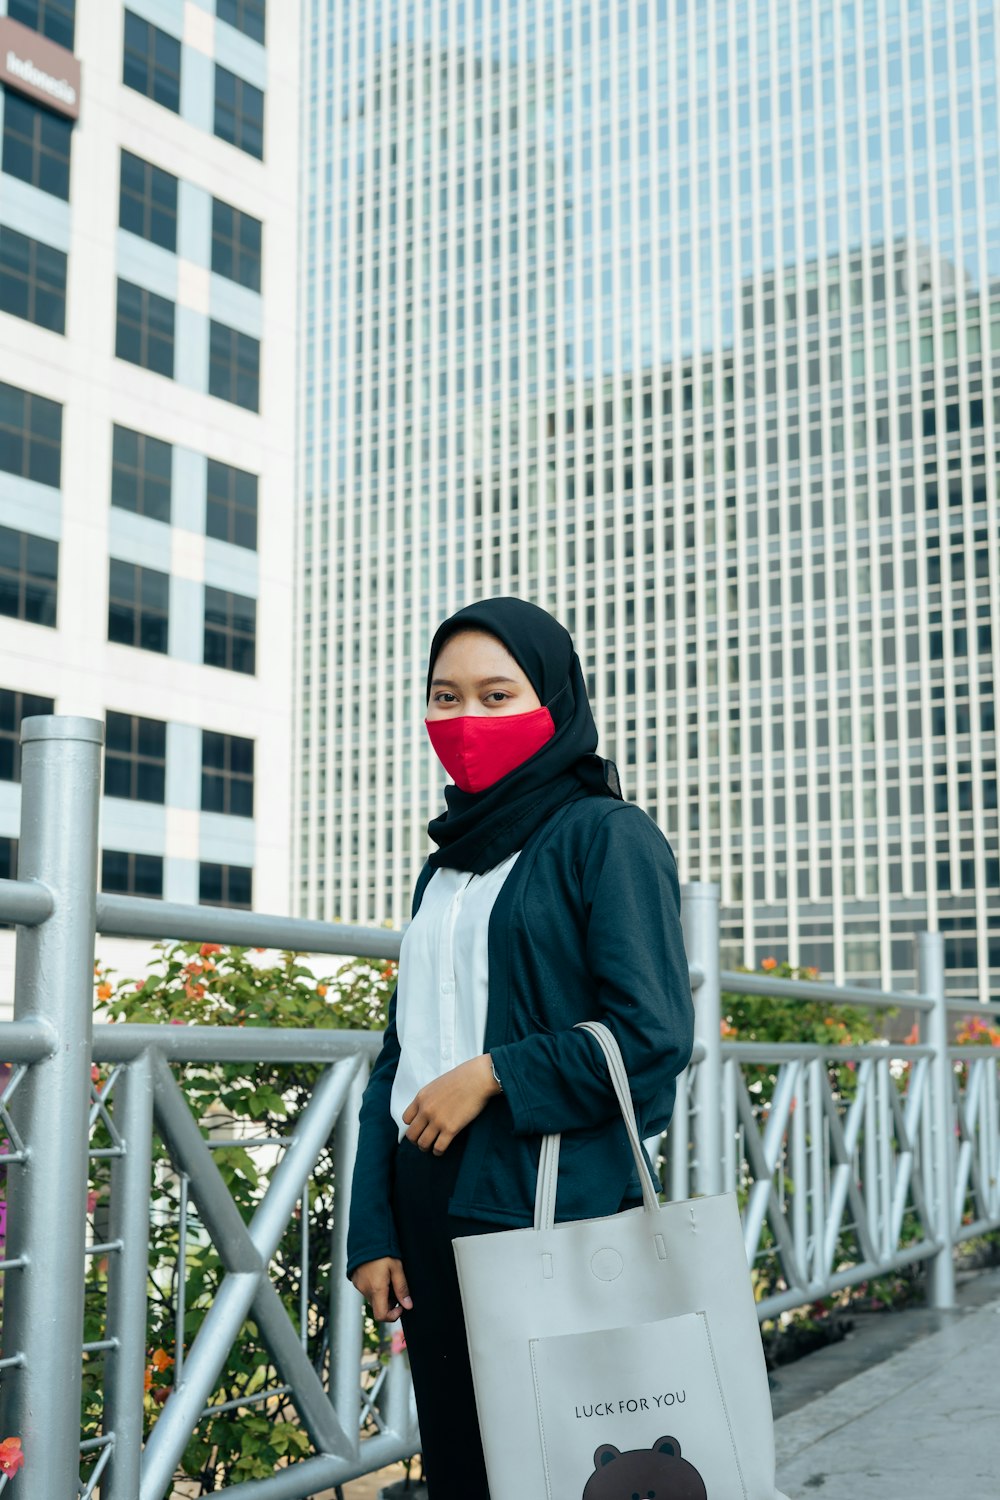 woman in black hijab standing near white metal railings